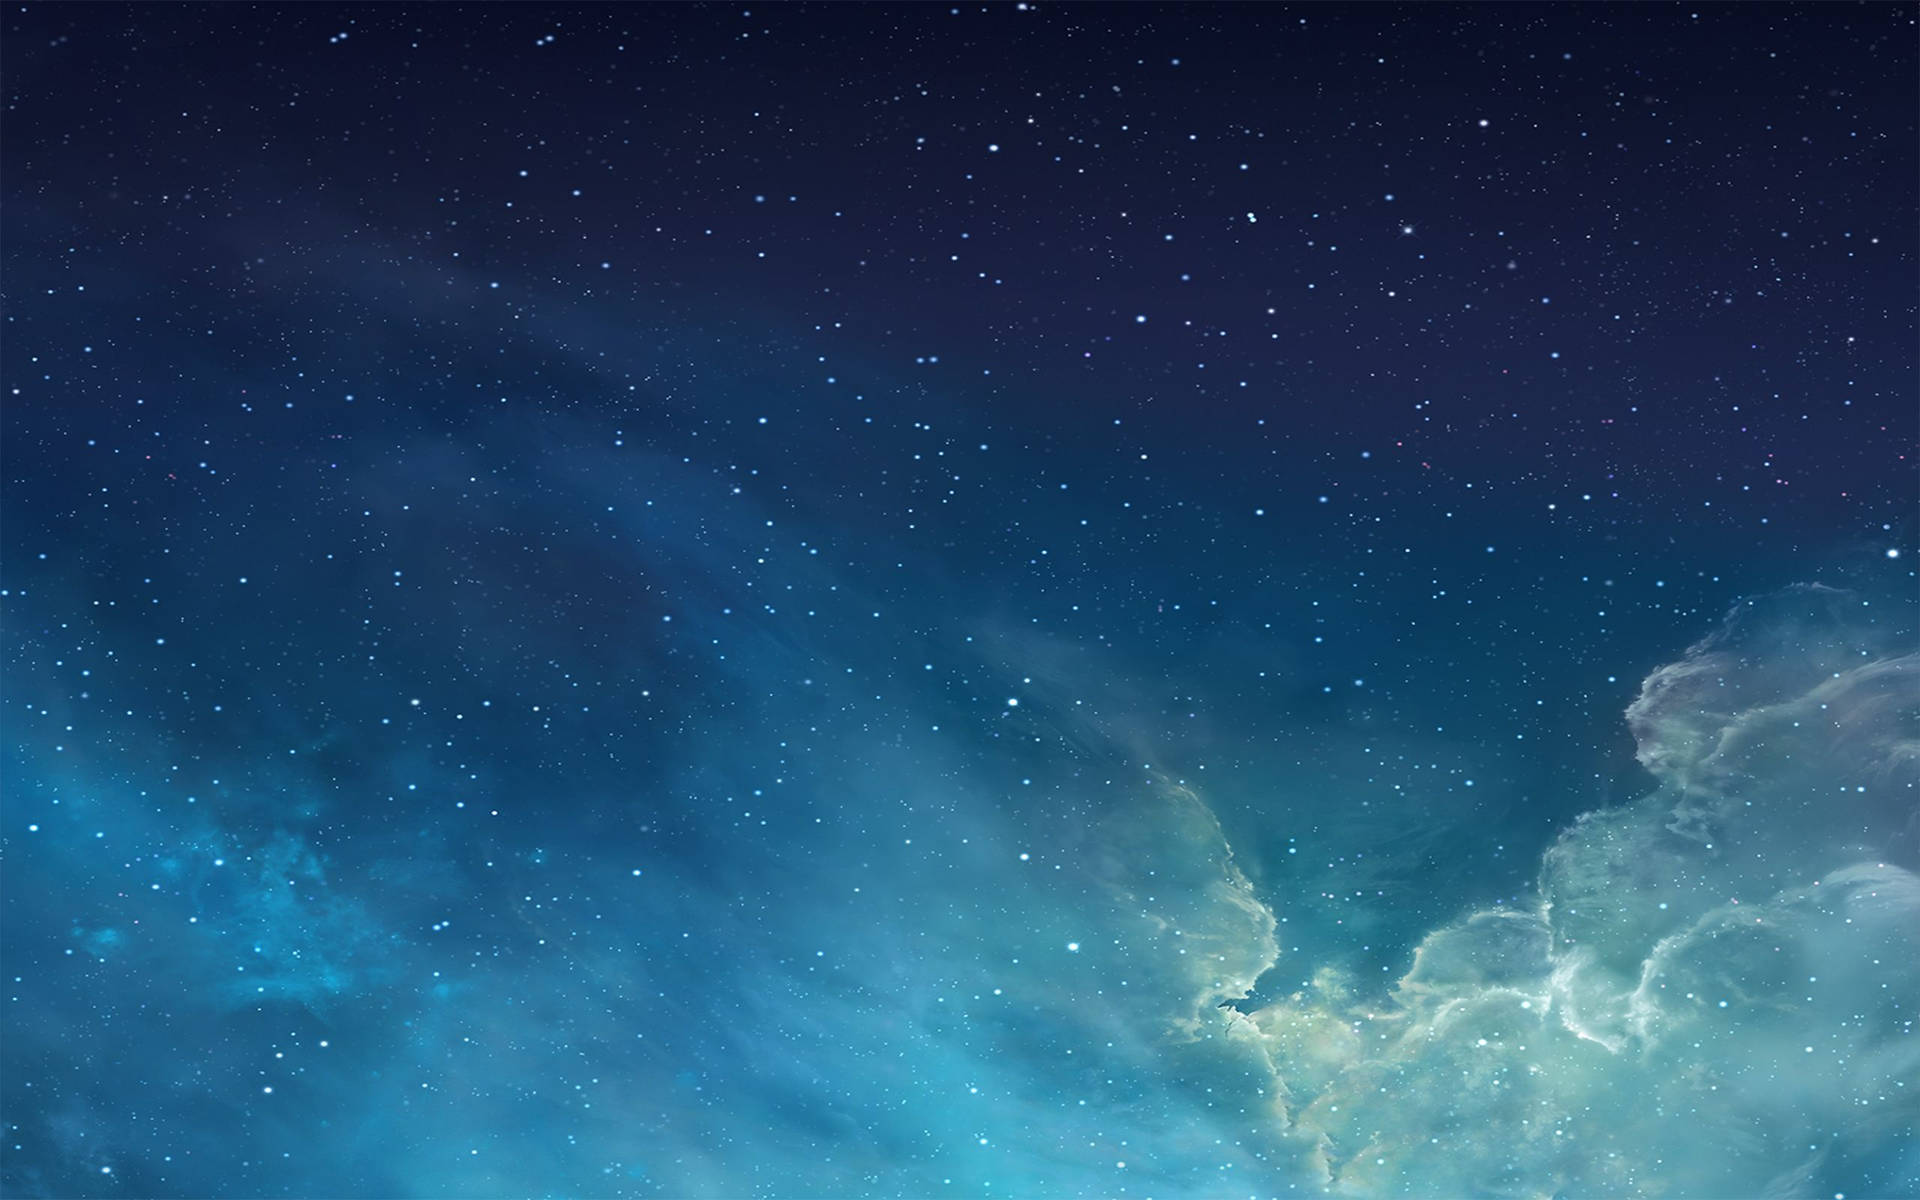 A crisp, star-filled night sky Wallpaper